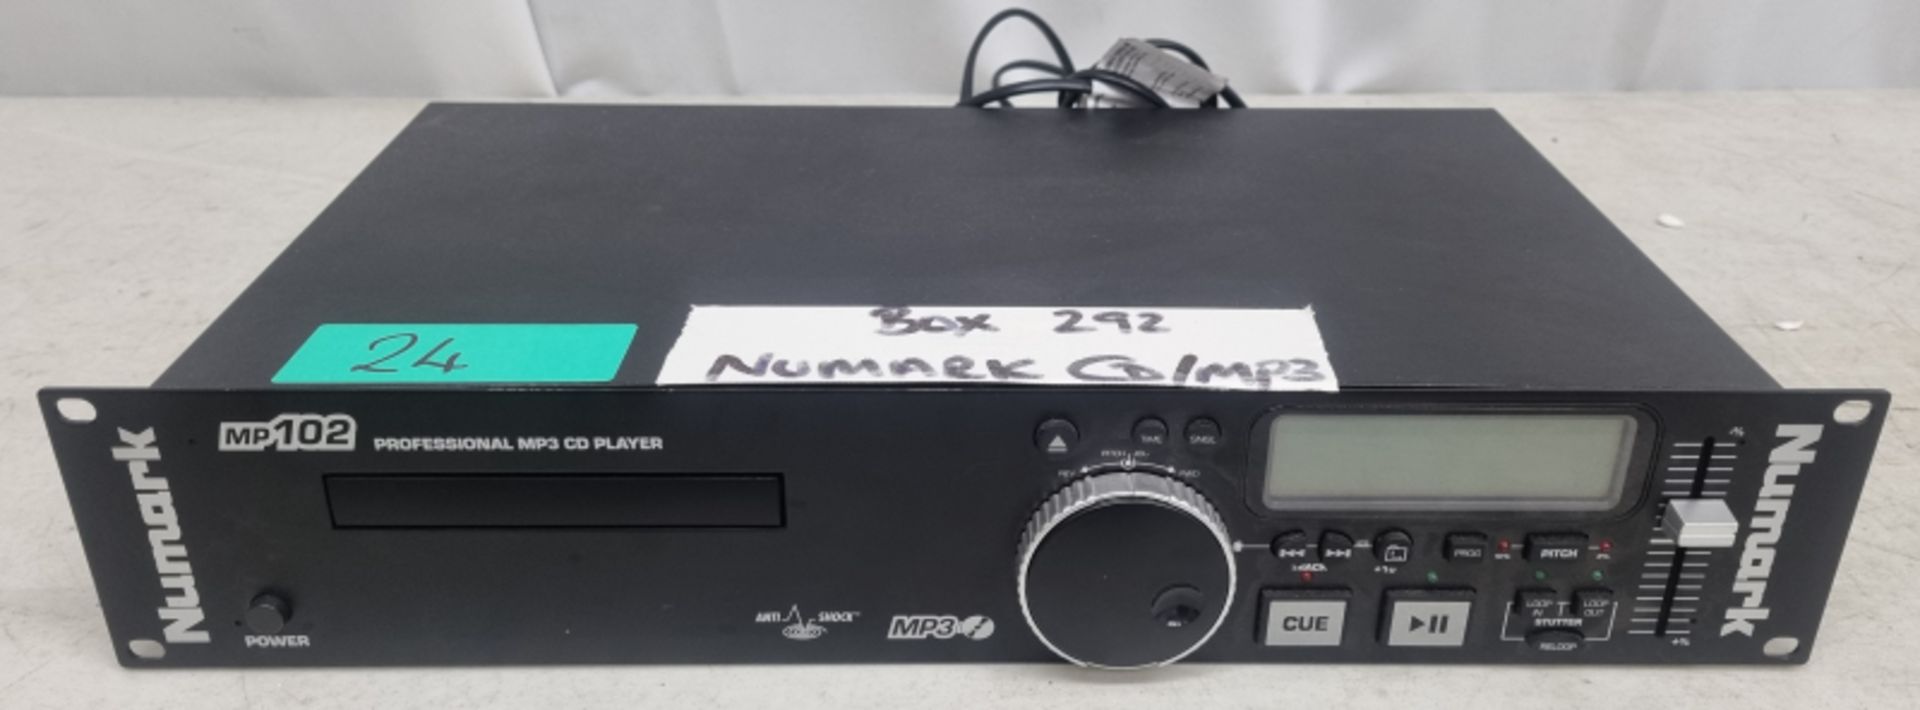 Numark MP102 - Professional MP3/CD Player